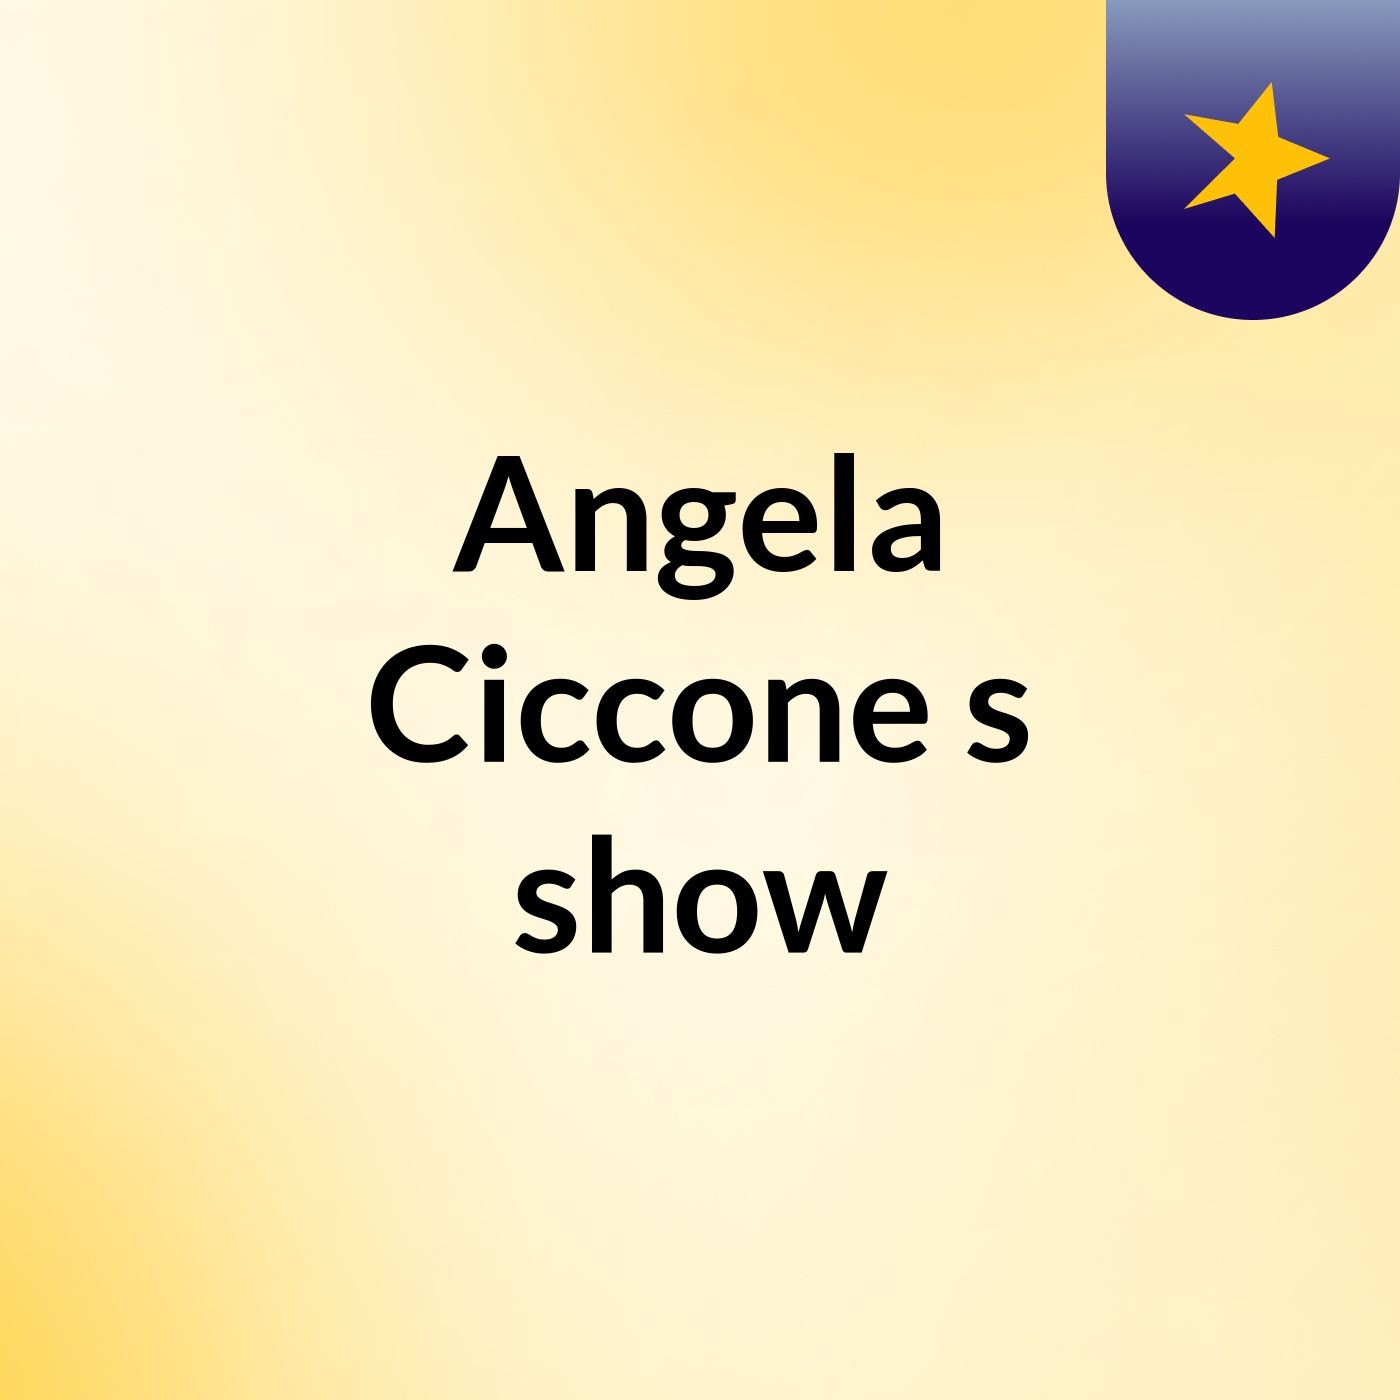 Episode 5 - Angela Ciccone's show